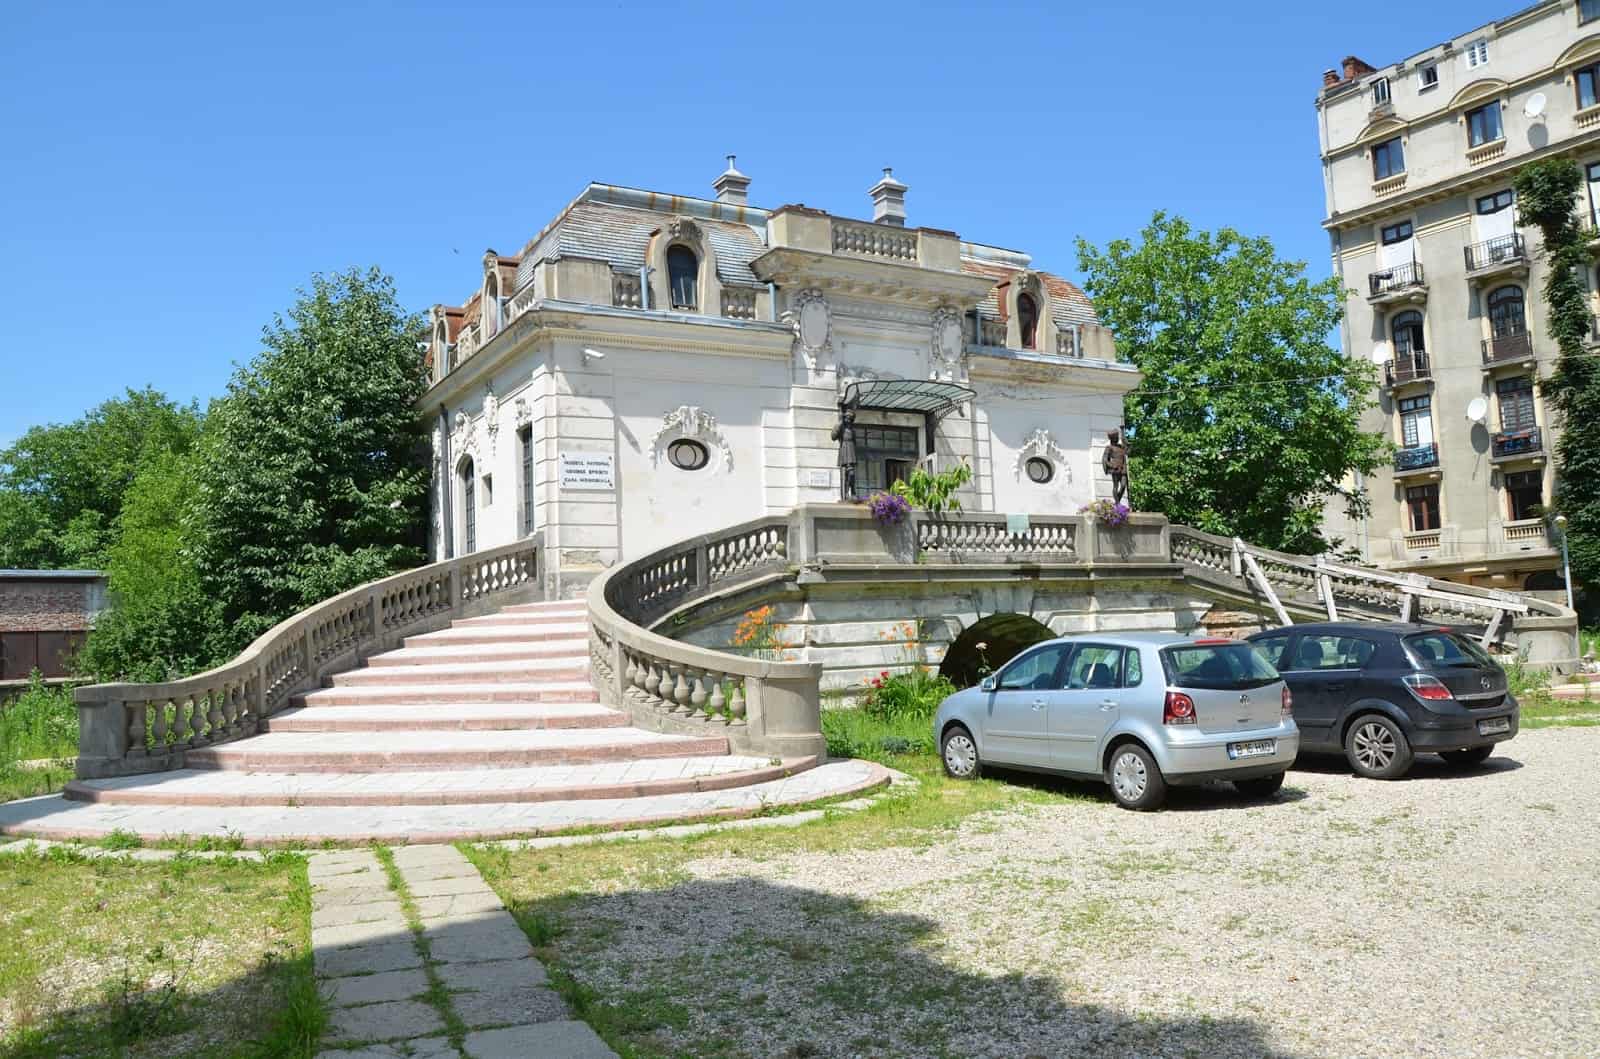 George Enescu Memorial House in Bucharest, Romania